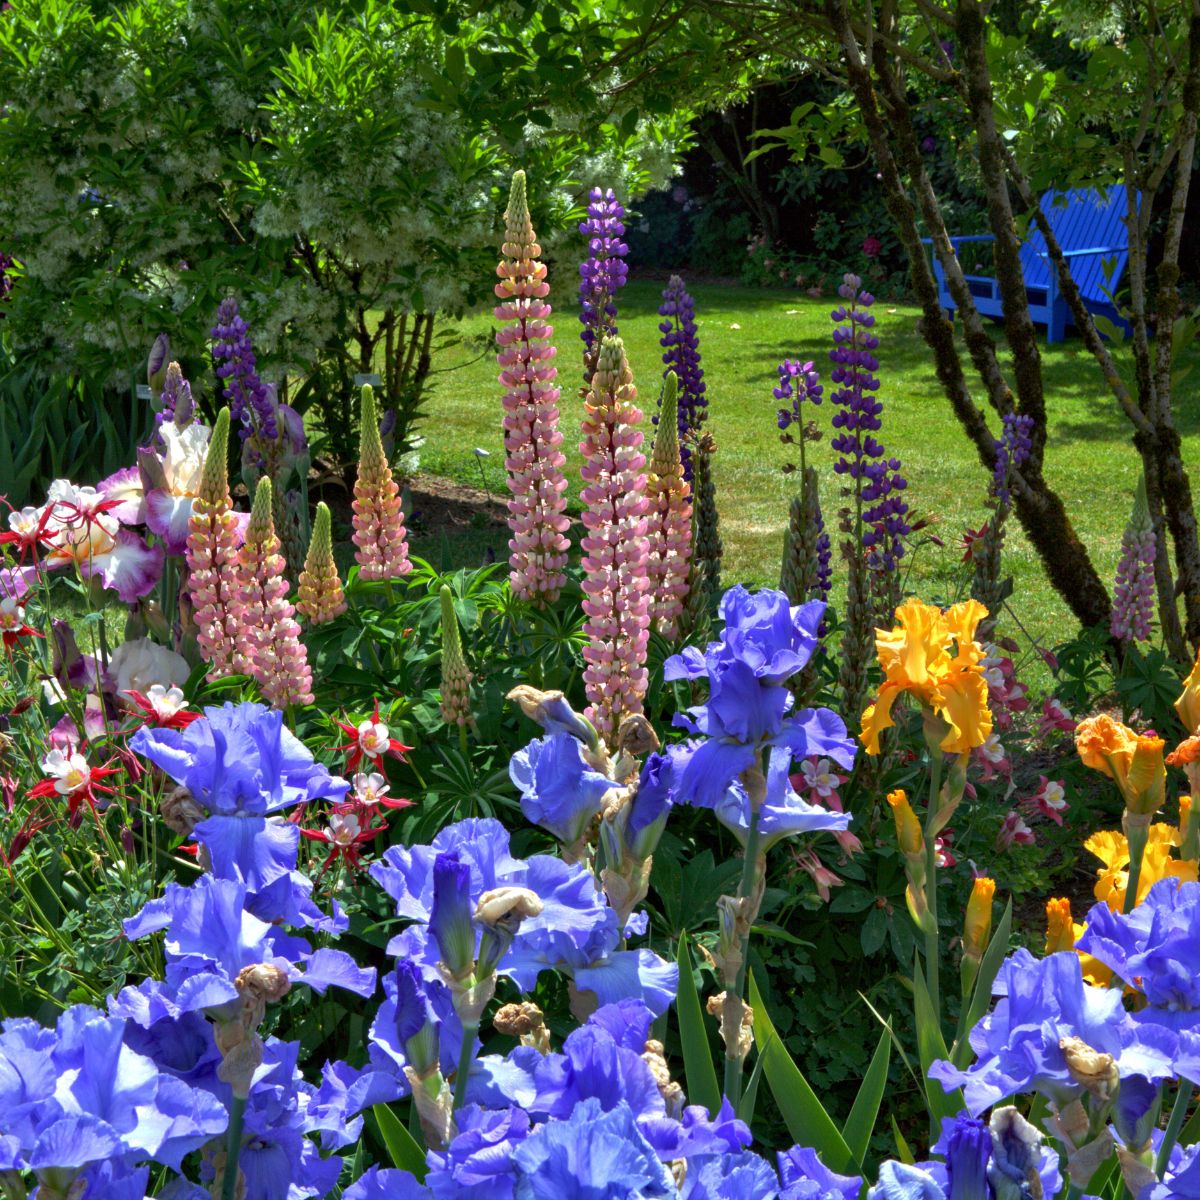 A beautiful mixture of iris, lupine and columbine flowers. 